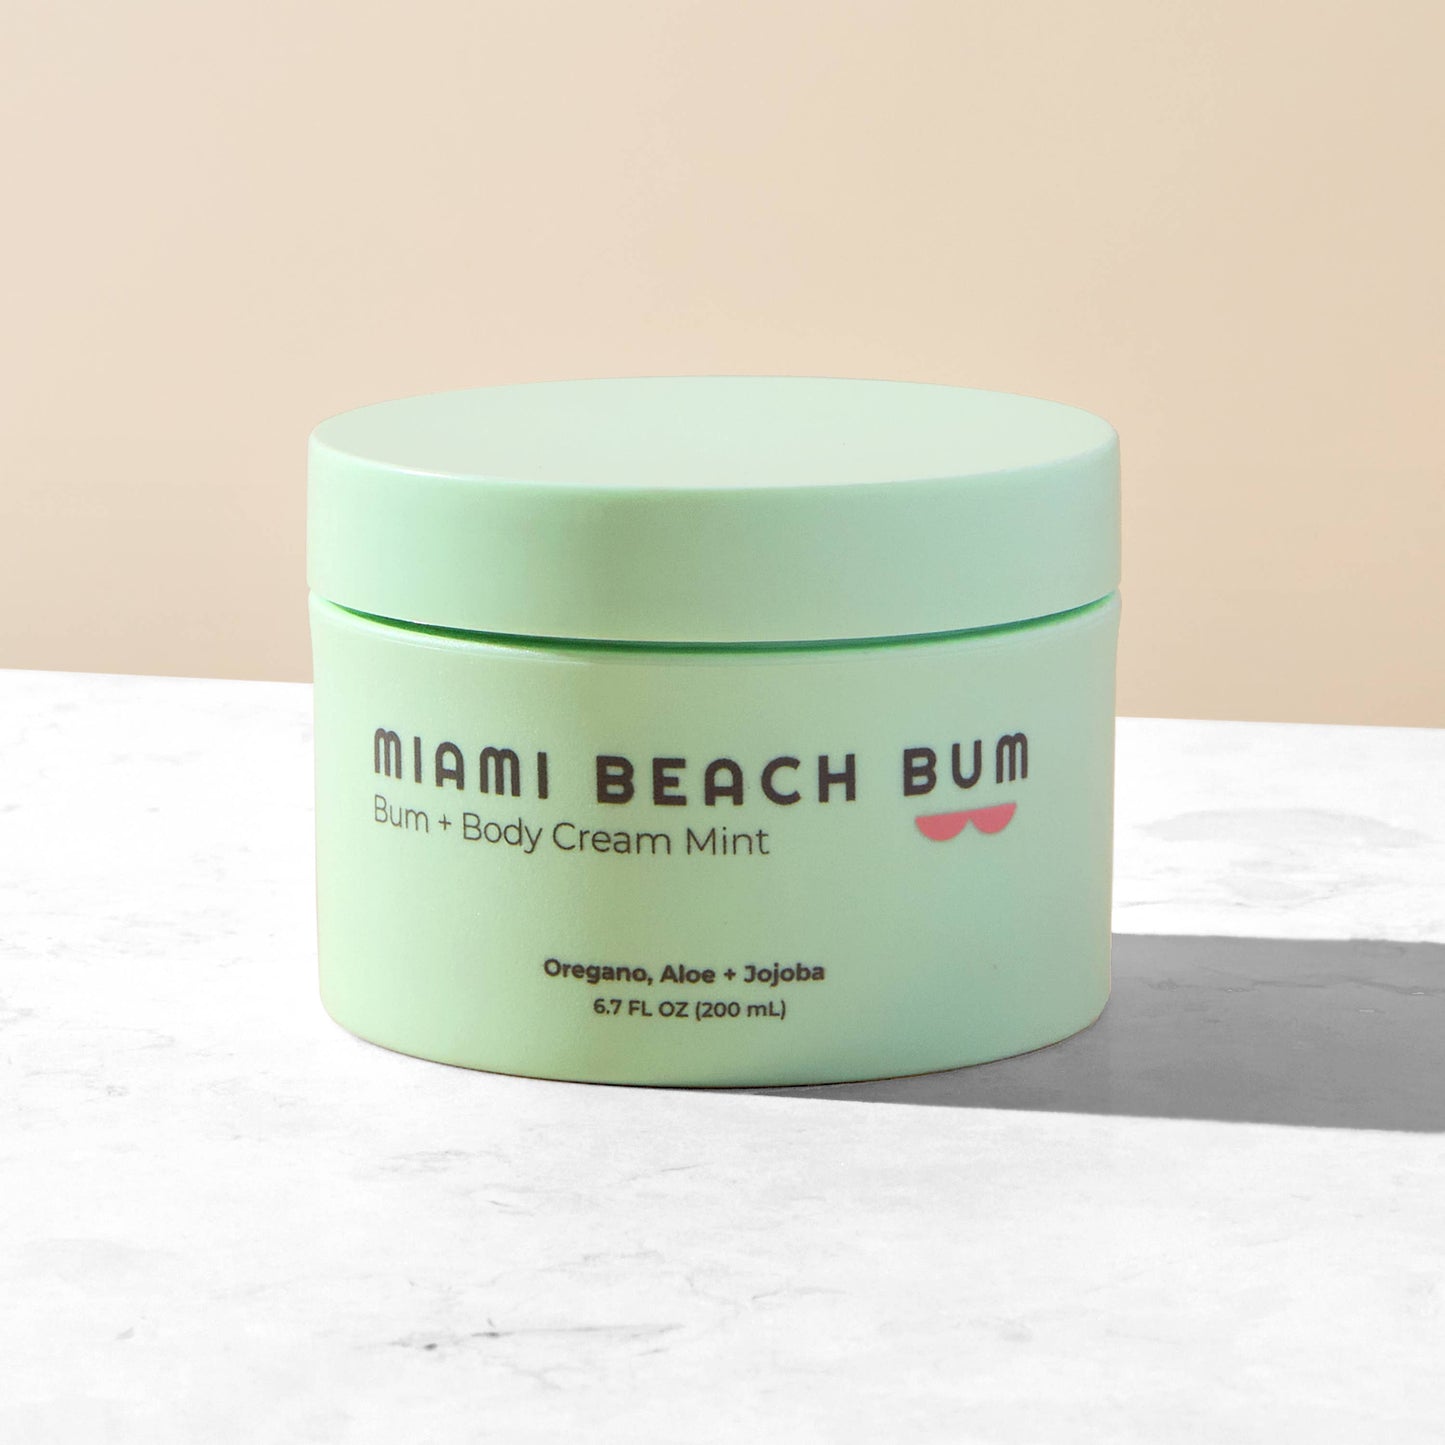 Miami Beach Bum Bum and Body Cream Mint